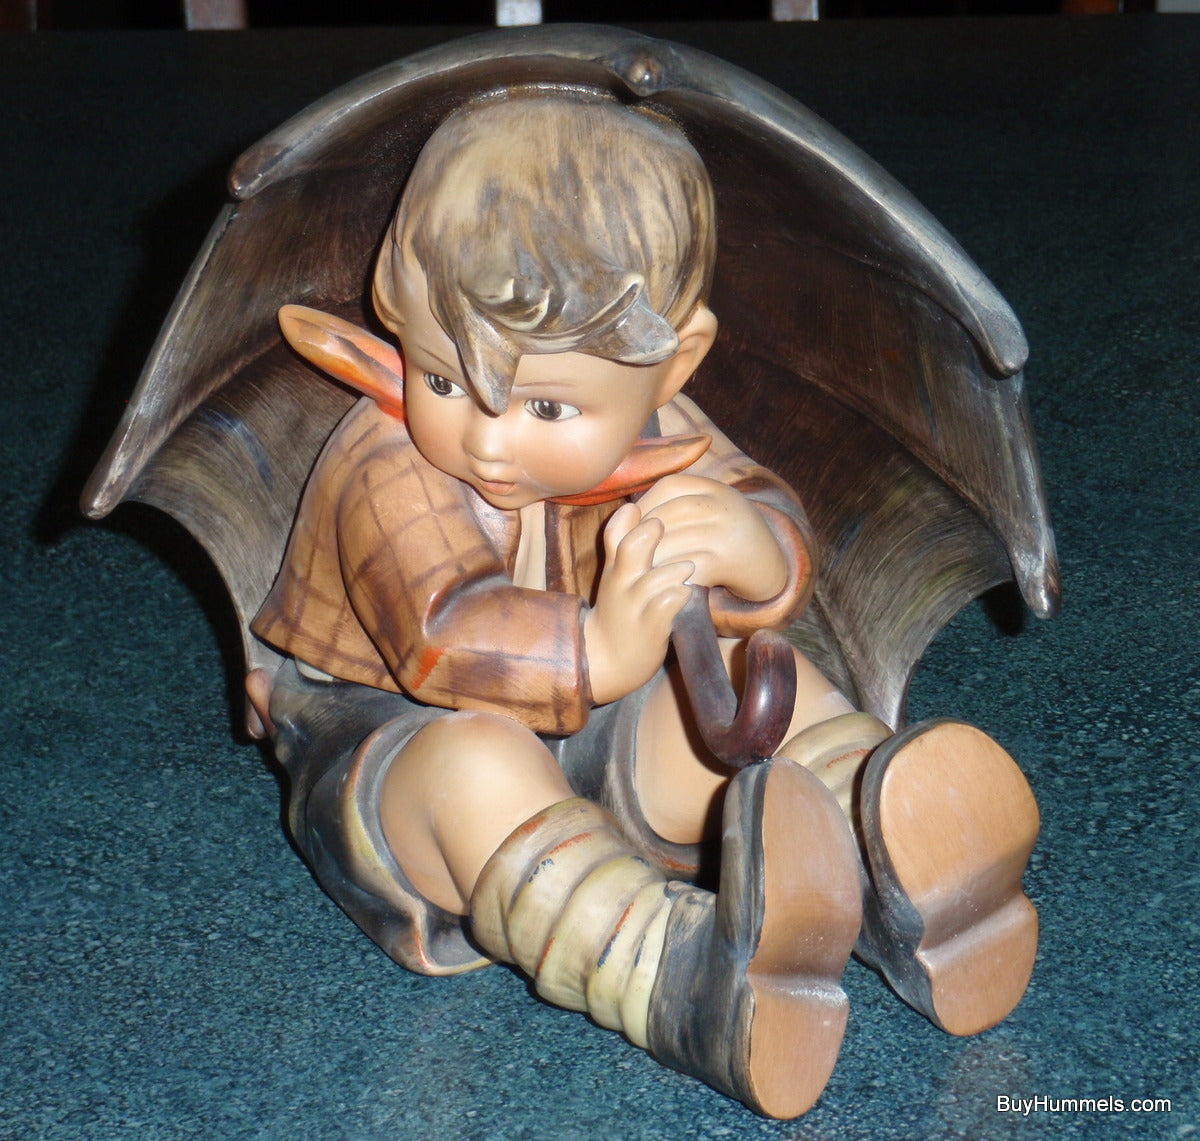 Lot # 268: Bavarian Boy Hummel Figurine